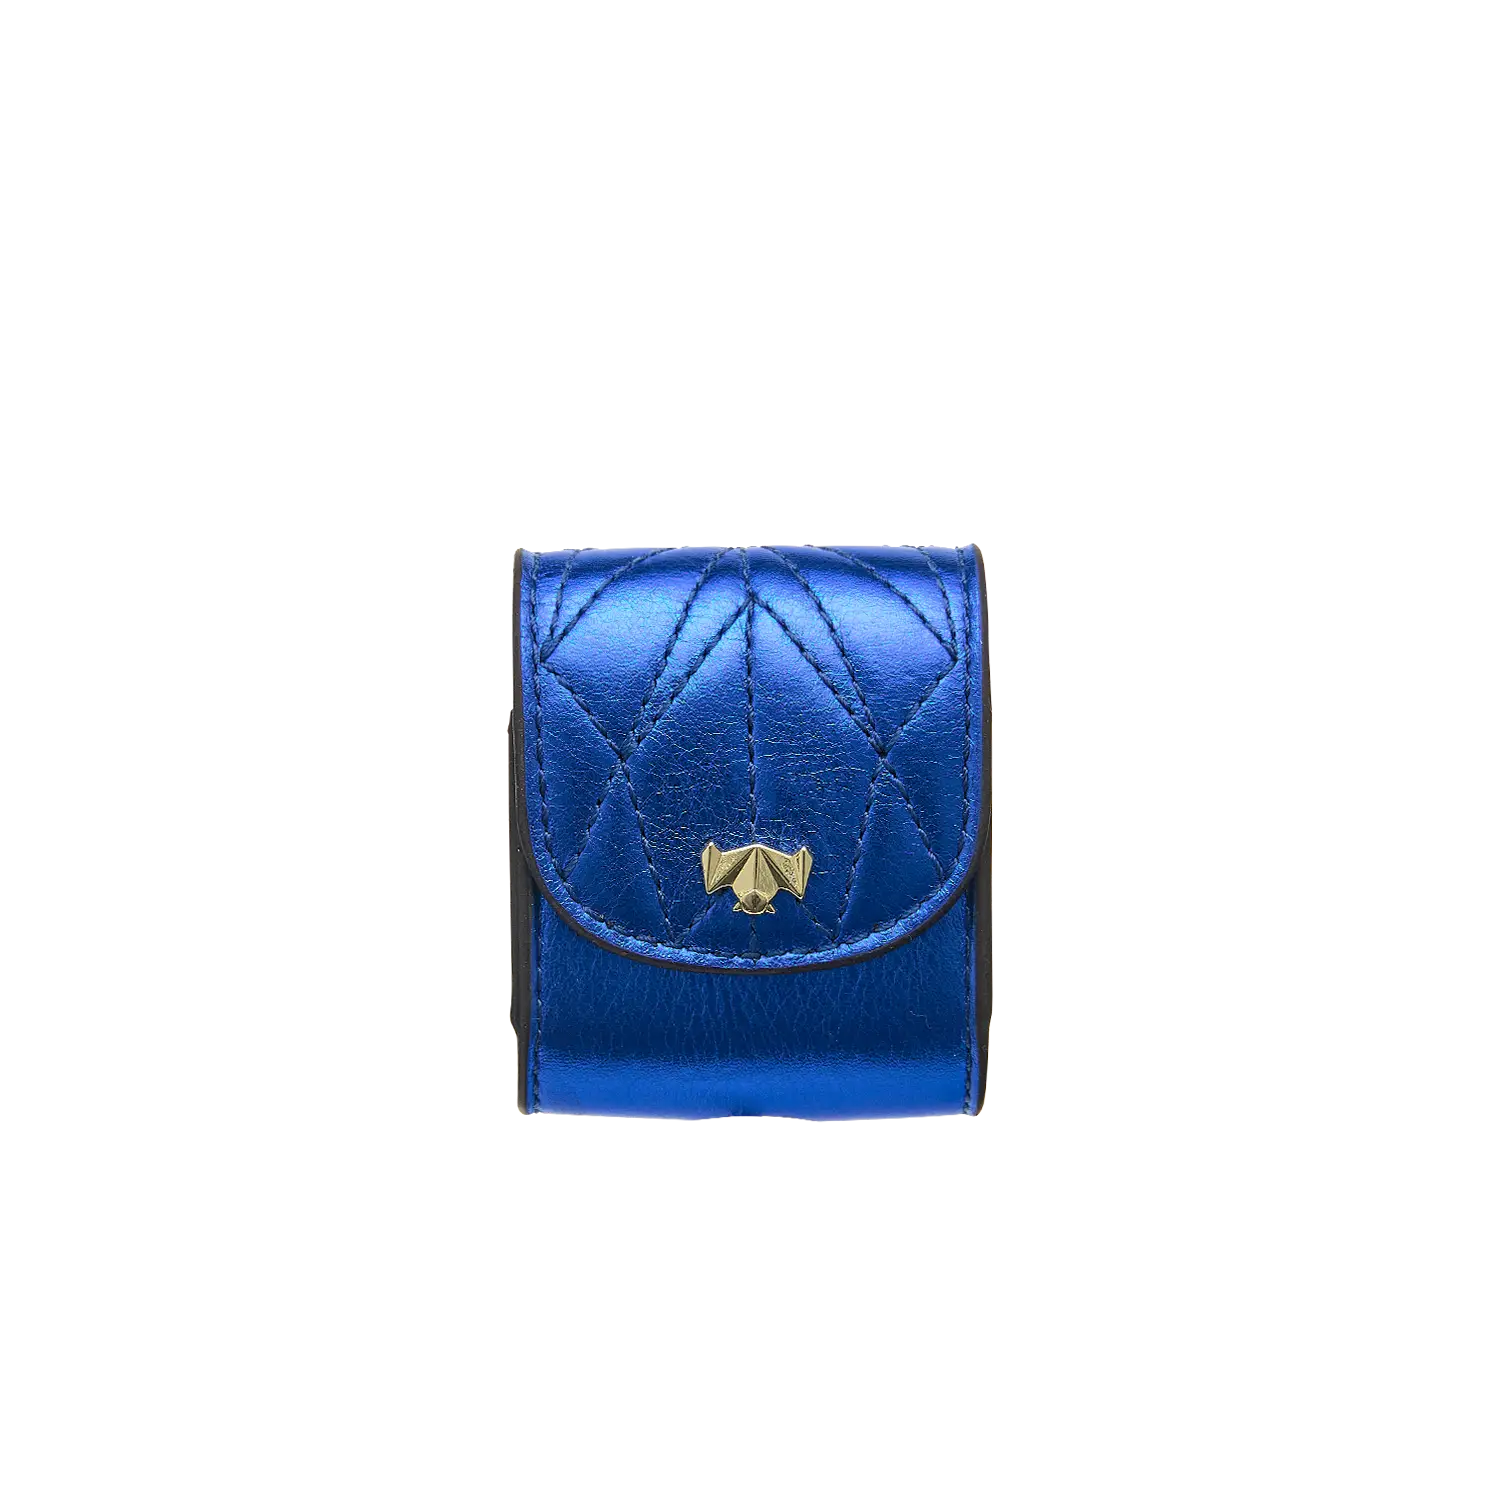 Airpods Bag - Keep it Funky - blau-metallic